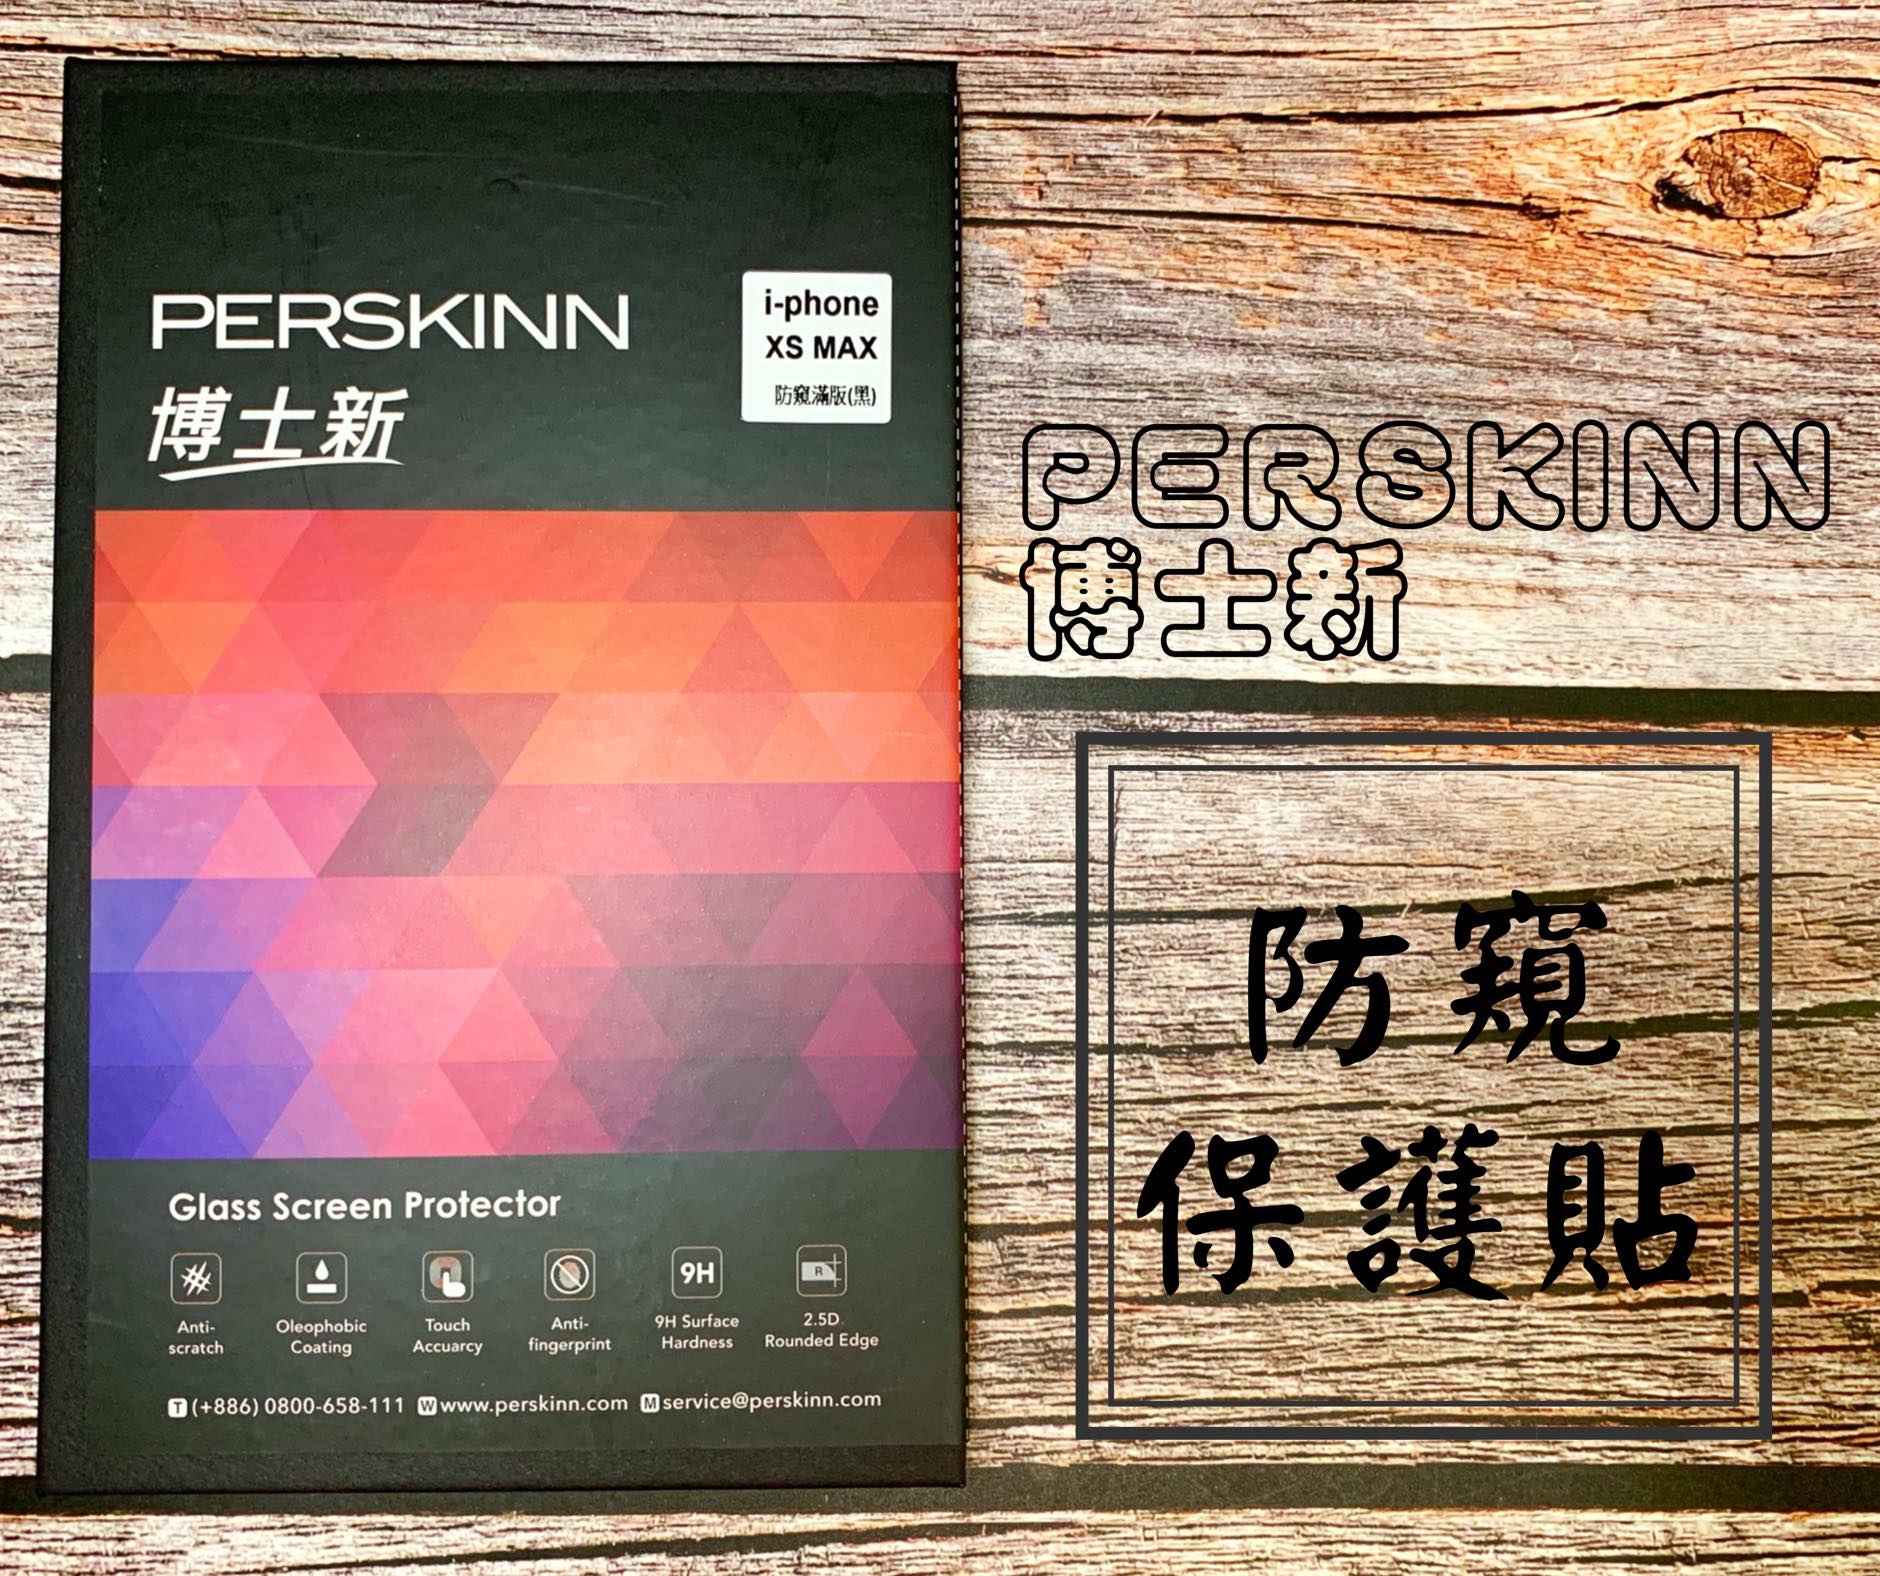 PERSKINN 防窺保護貼推薦 - 自己 DIY 保護貼教學、對比防窺與一般保護貼差異 - iPhone 保護貼 - 科技生活 - teXch